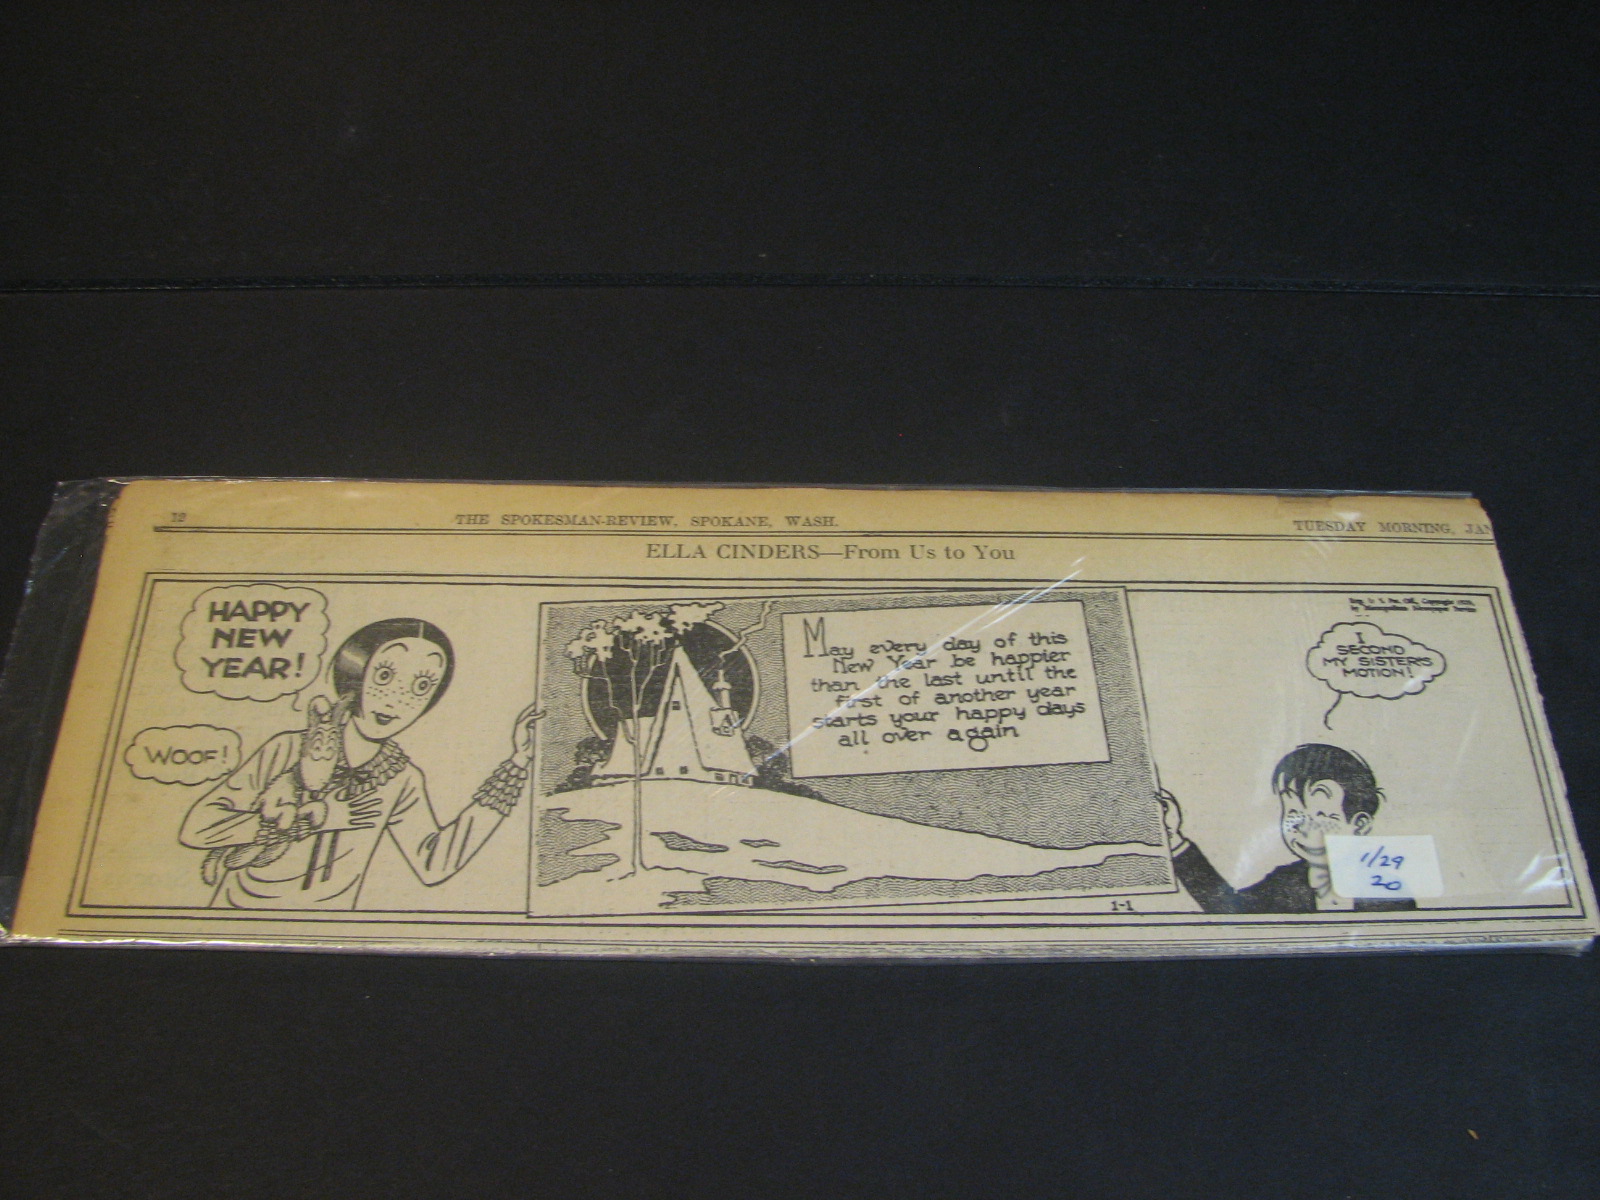 Andy Madura's Sunday Comics - Prince Valiant - 1953-1956